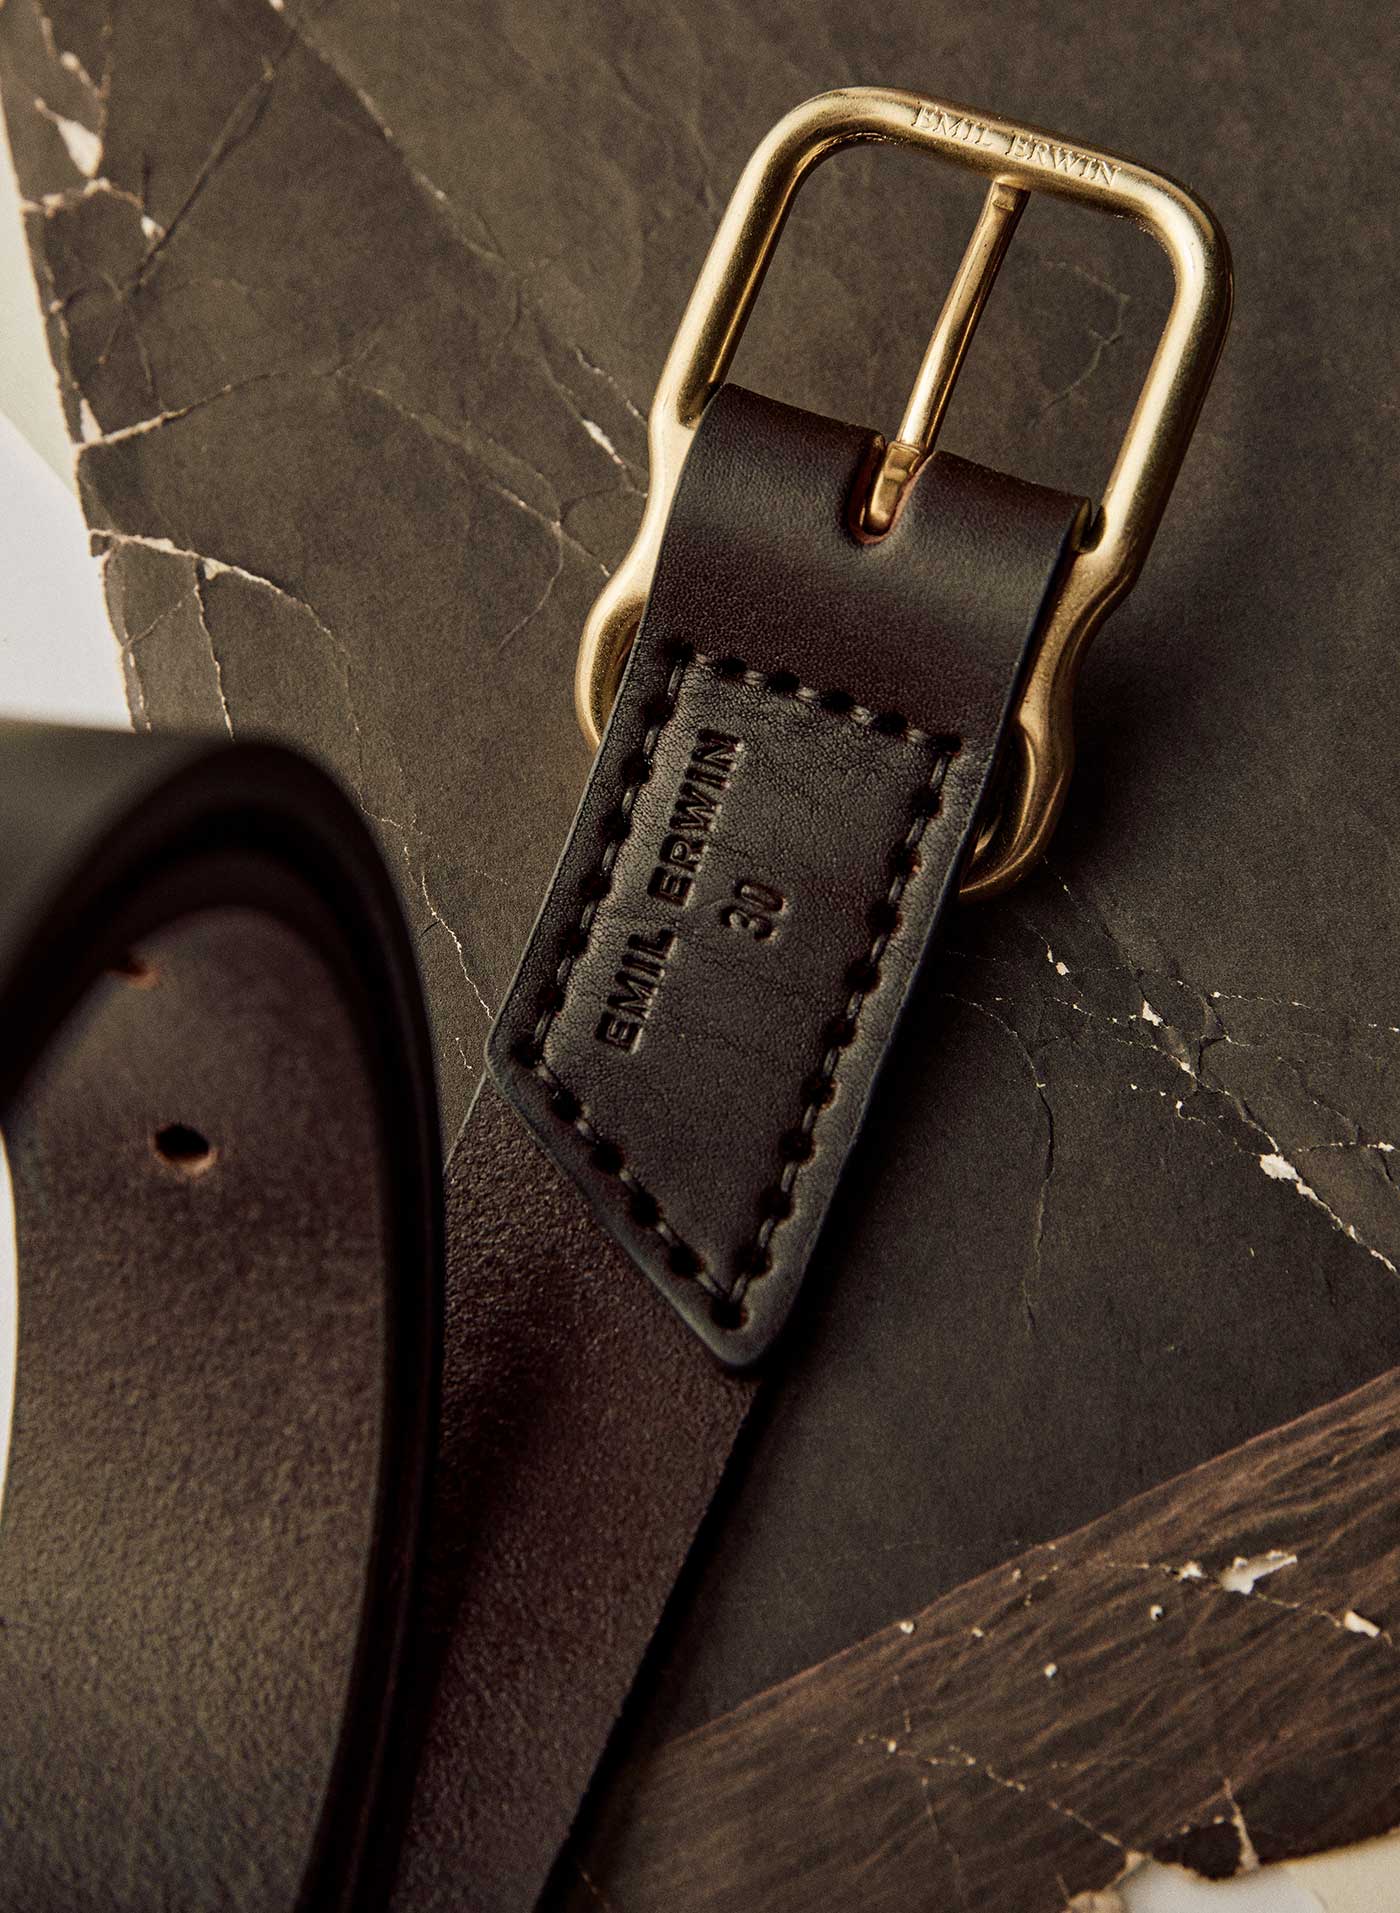 Filson 1-1/2 Leather Belt | Brown | 30